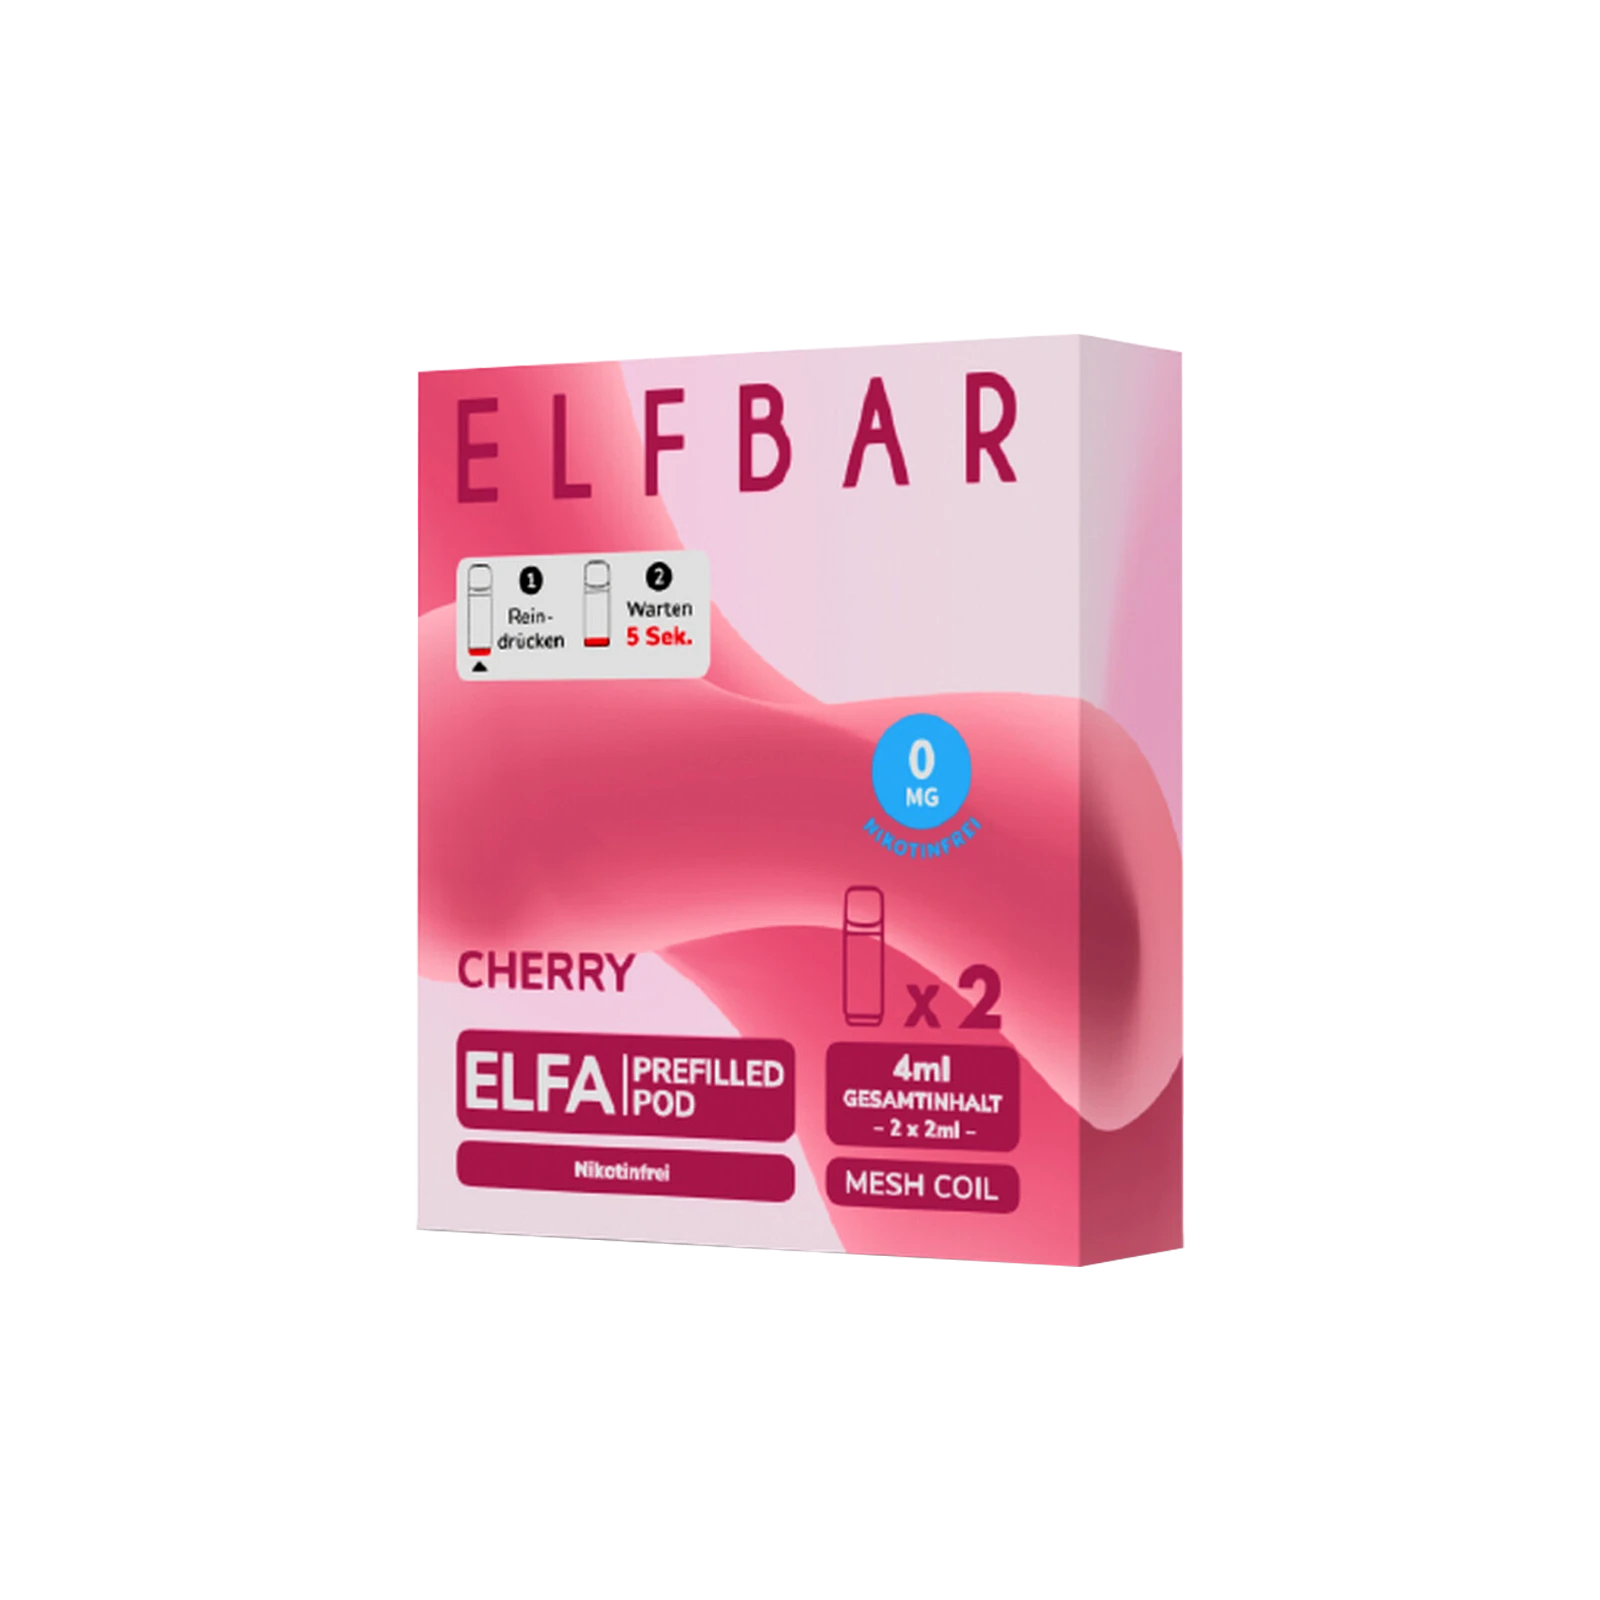 Elf Bar ELFA CP Cherry Candy Nikotinfrei | Prefilled Pods günstig bestellen 1